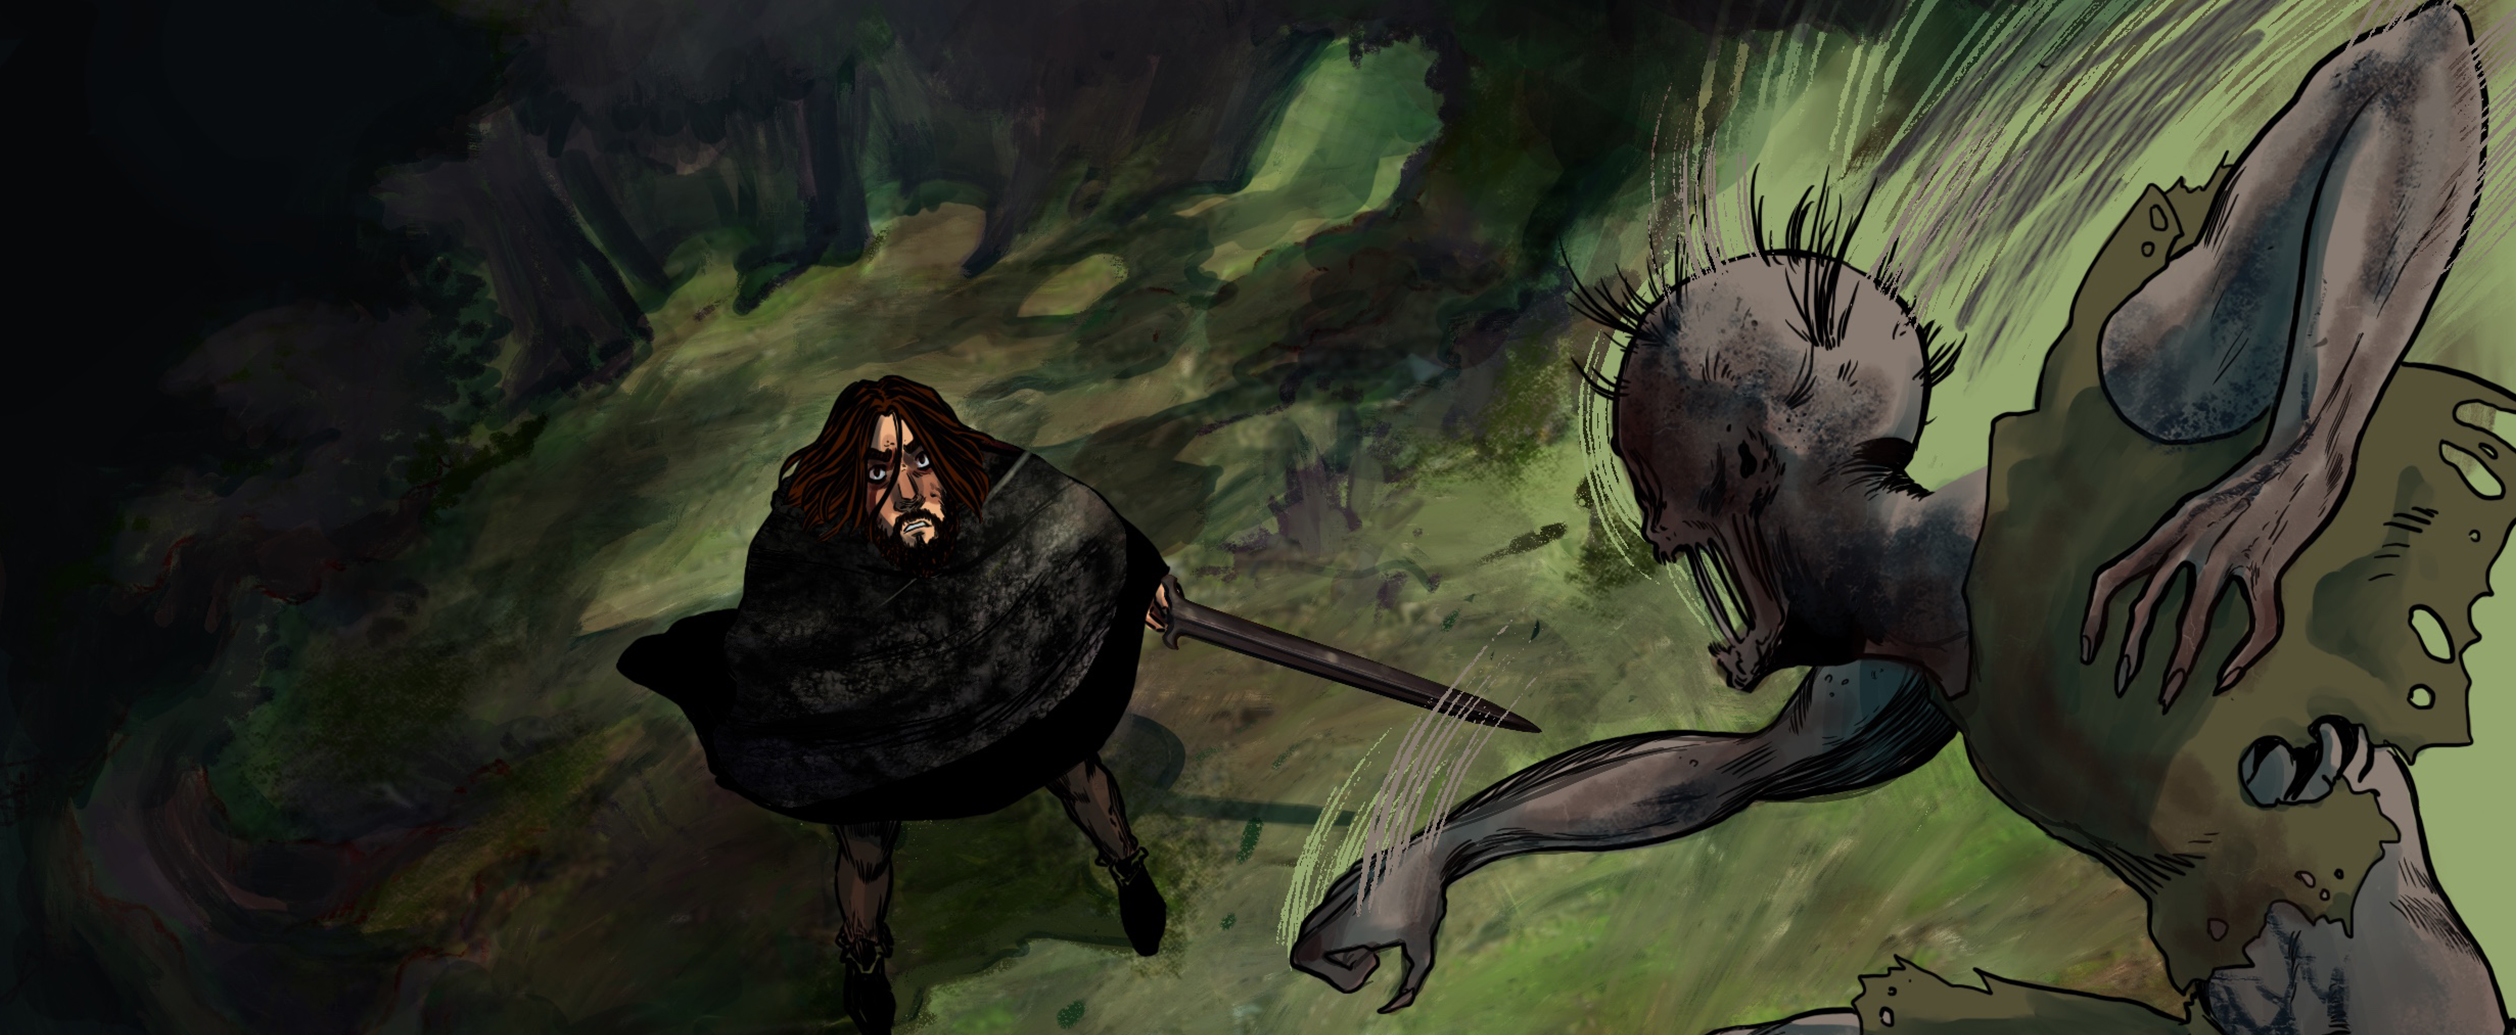 Viceode Arrowhead Iritus and Monster